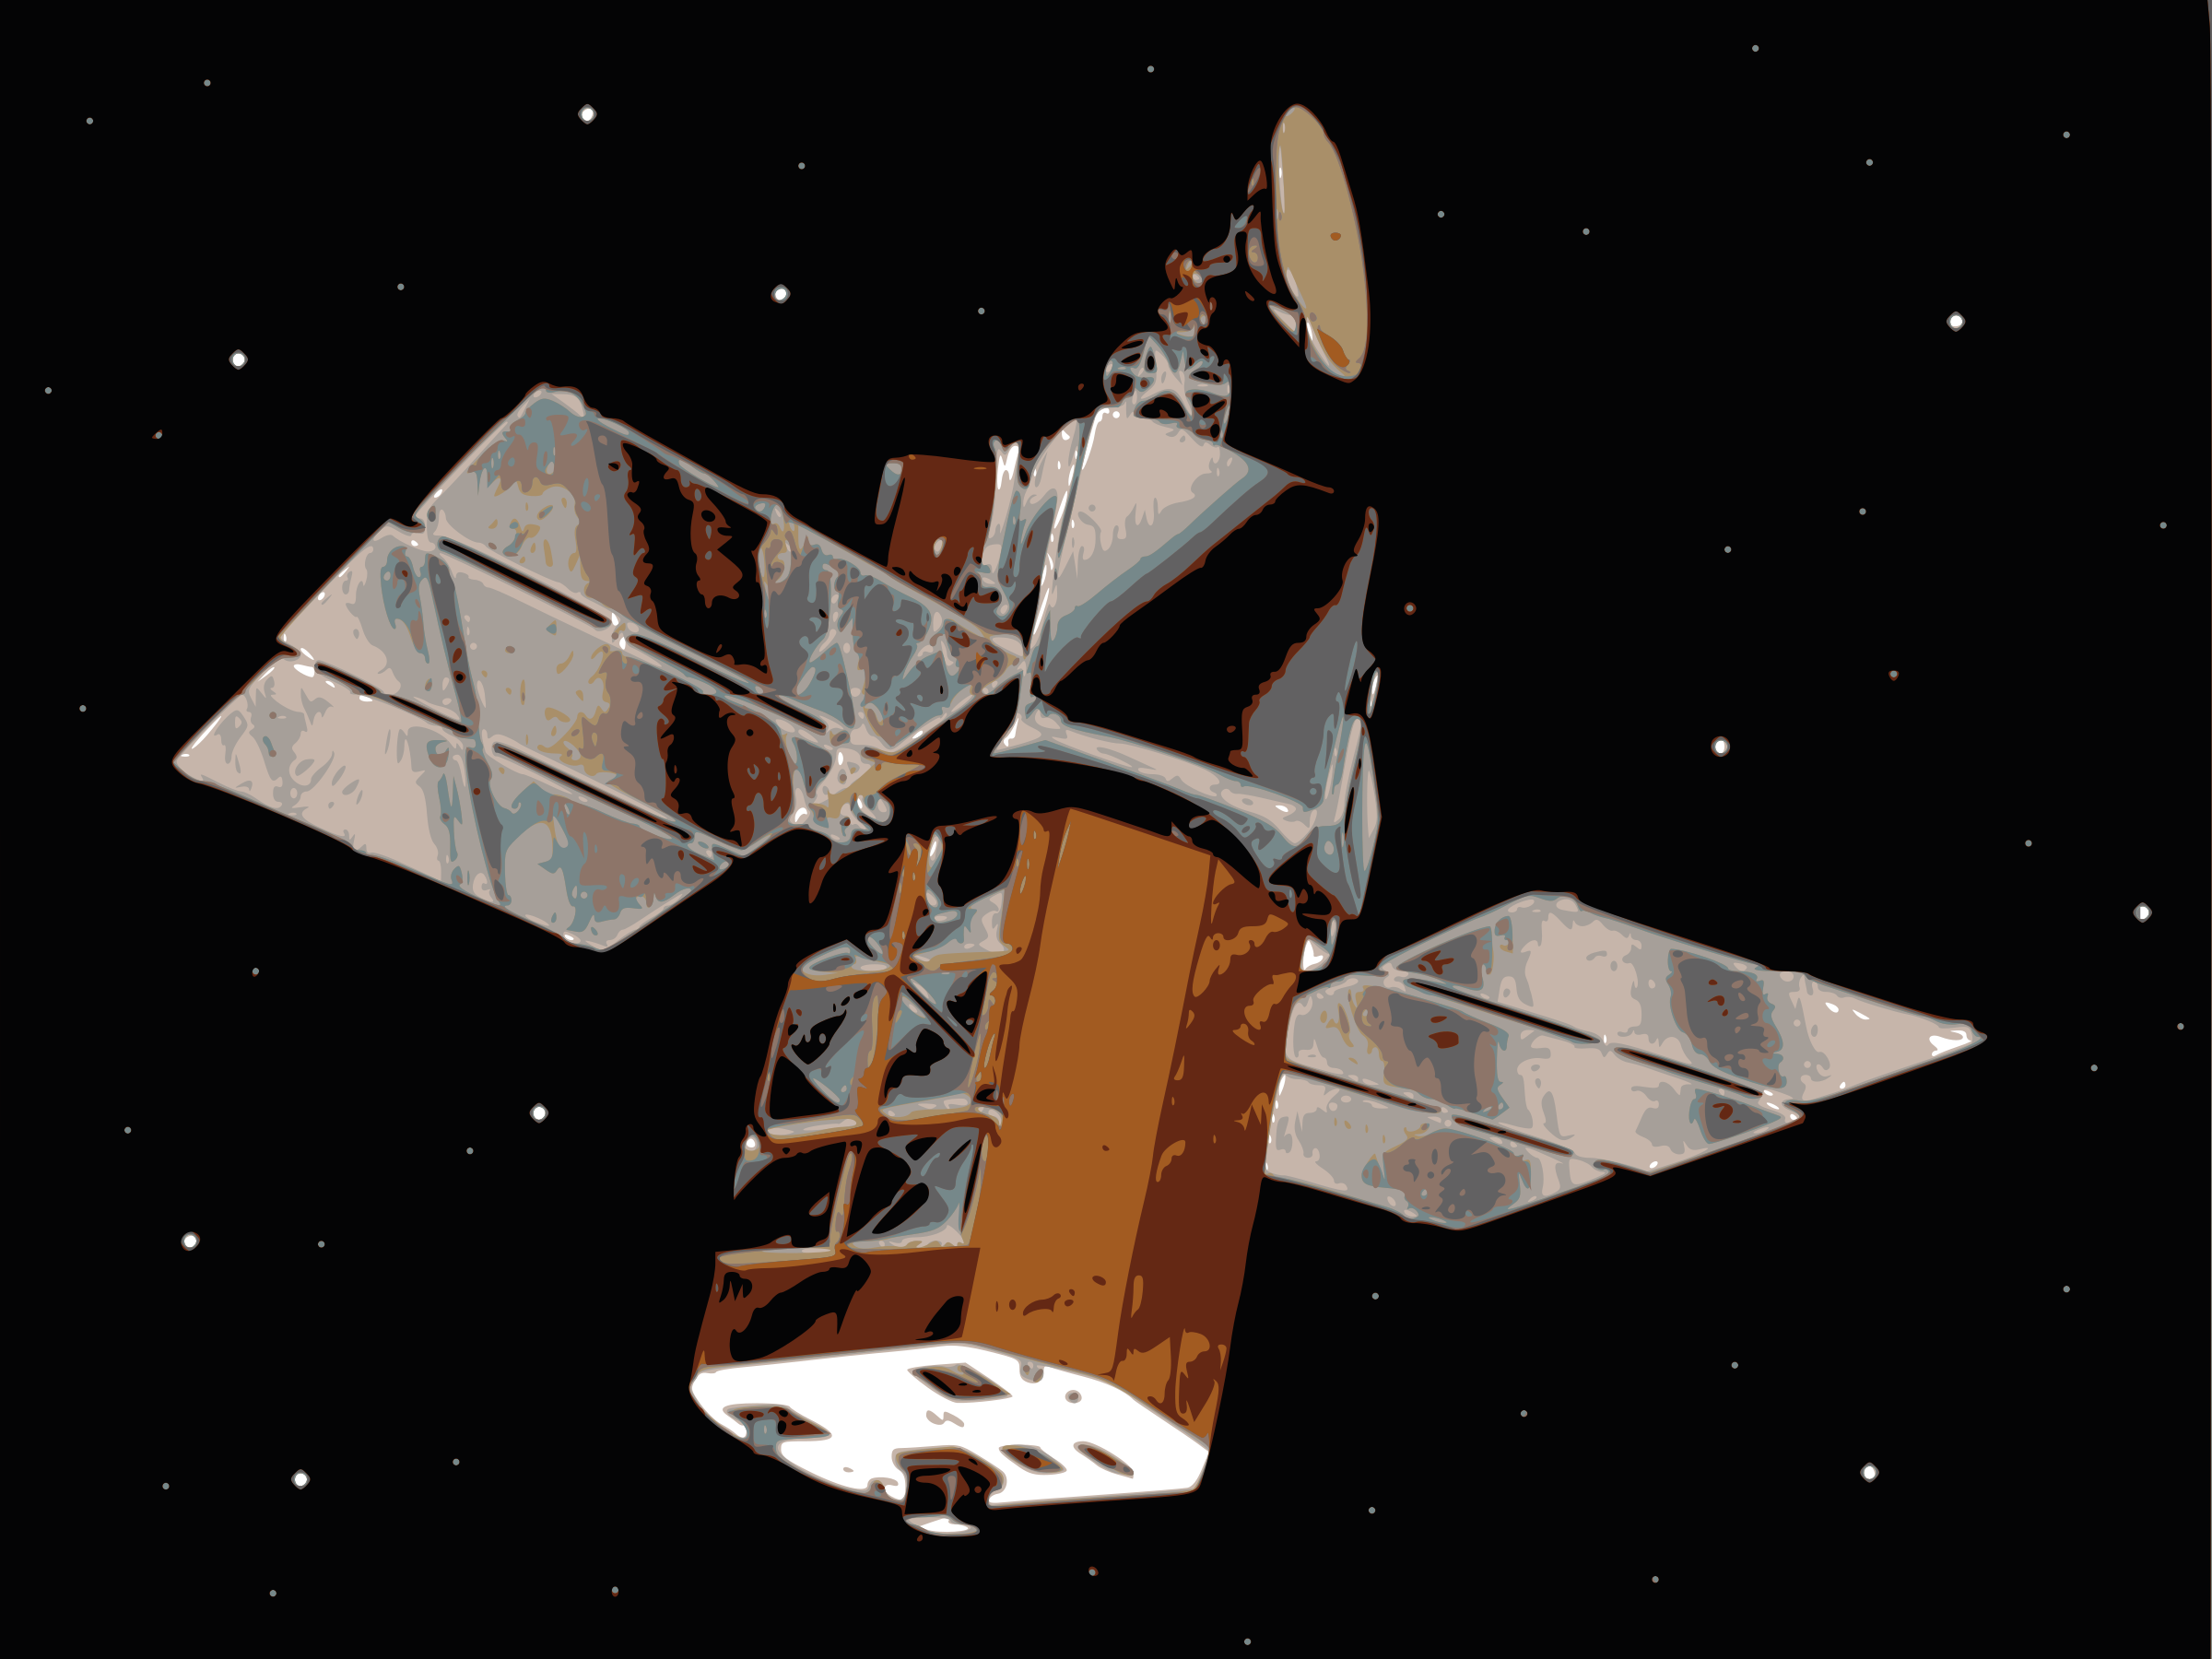 satellite in space SVG Clip arts